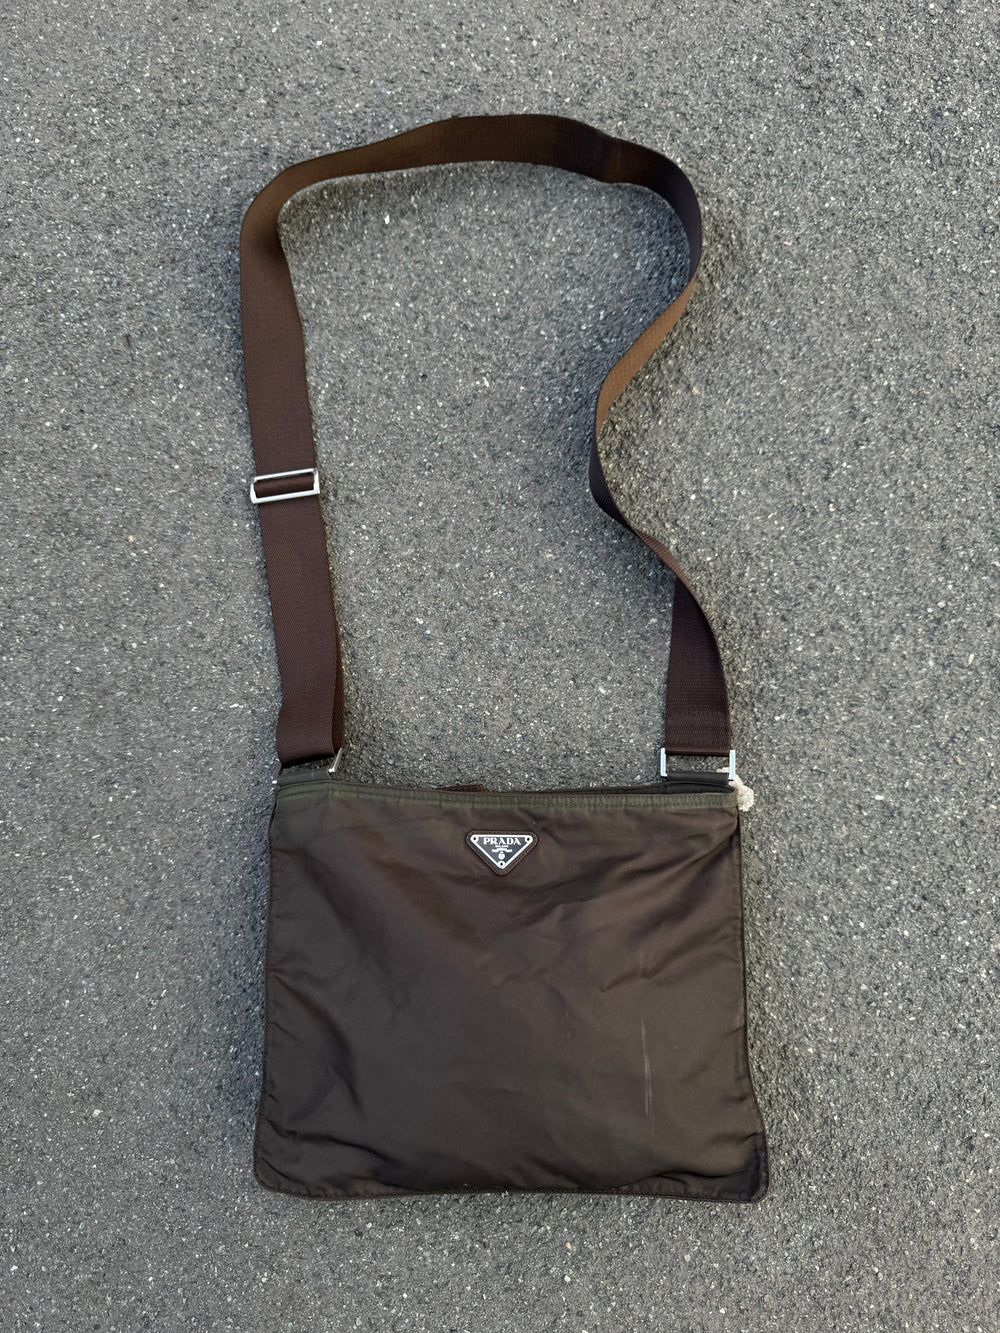 Early 2000s Prada Messenger Bag